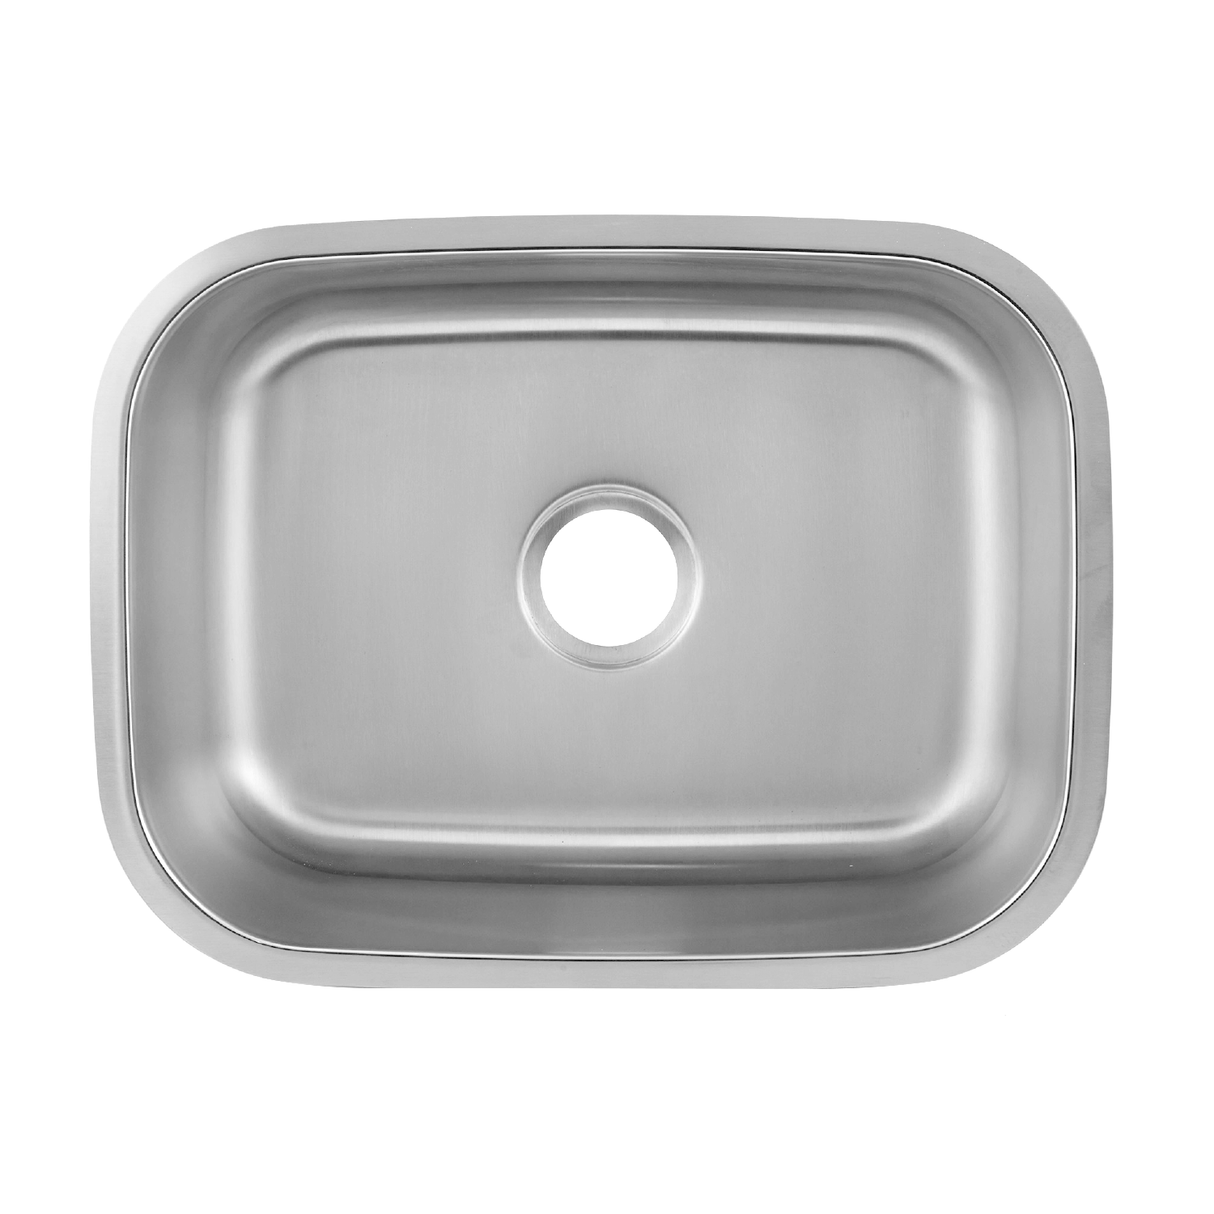 DAX Single Bowl Undermount Kitchen Sink, 18 Gauge Stainless Steel, Brushed Finish, 23-1/2 x 17-3/4 x 9 Inches (DAX-2317) DAX-2317